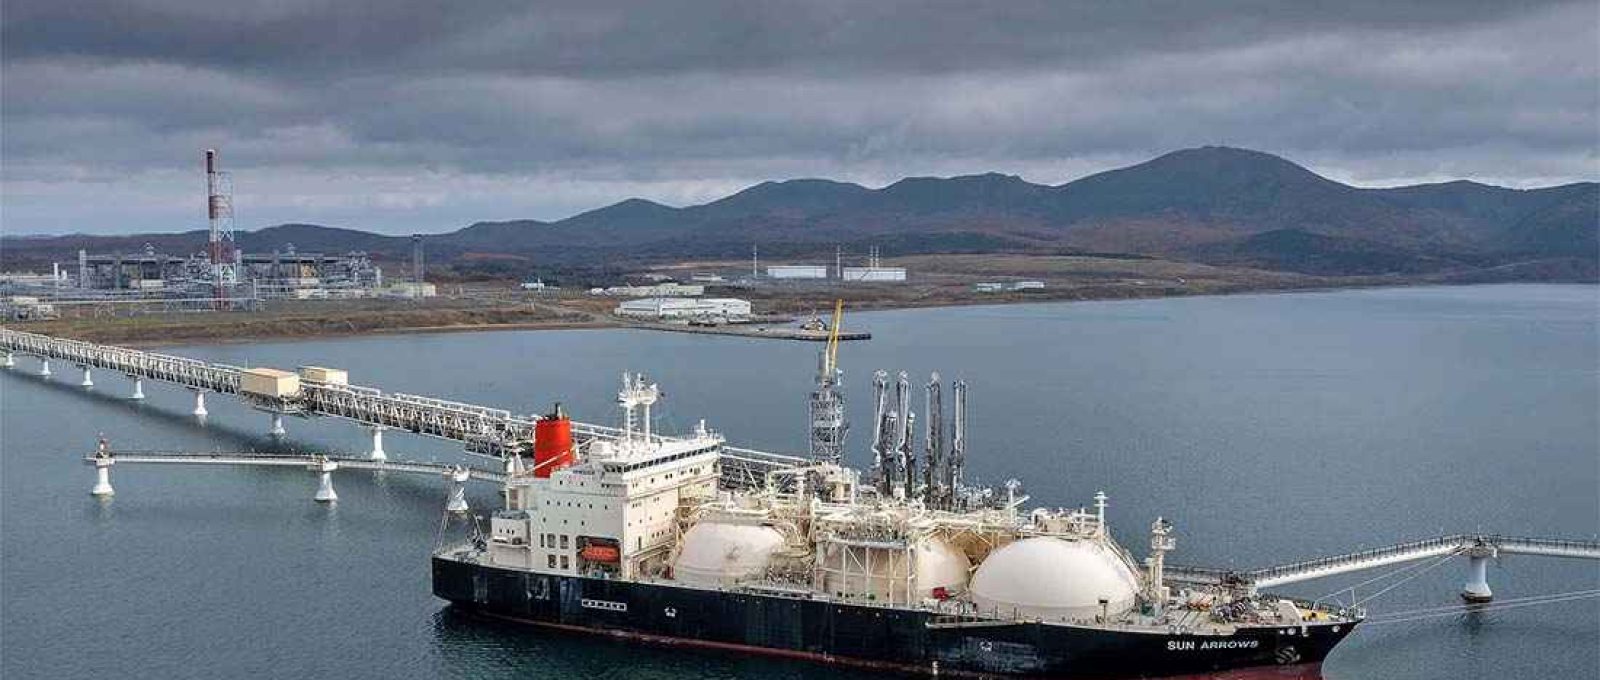 Navio-tanque recebe carga de gás natural do projeto Sacalina-2 no porto de Prigorodnoye, Rússia (AP).